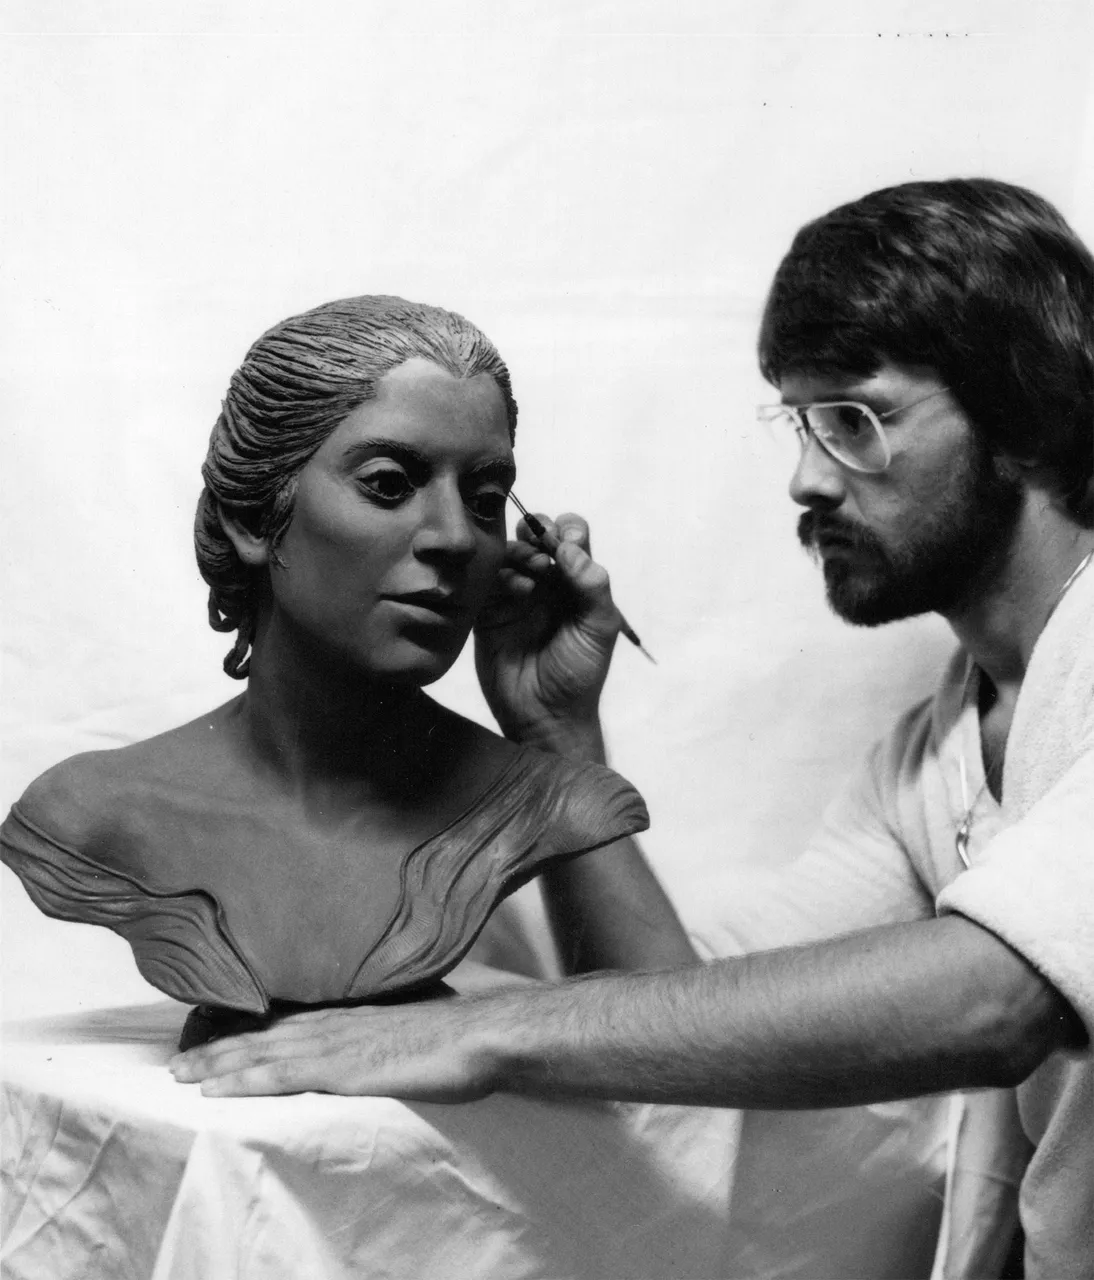 Me sculpting Nadyne in the 70s